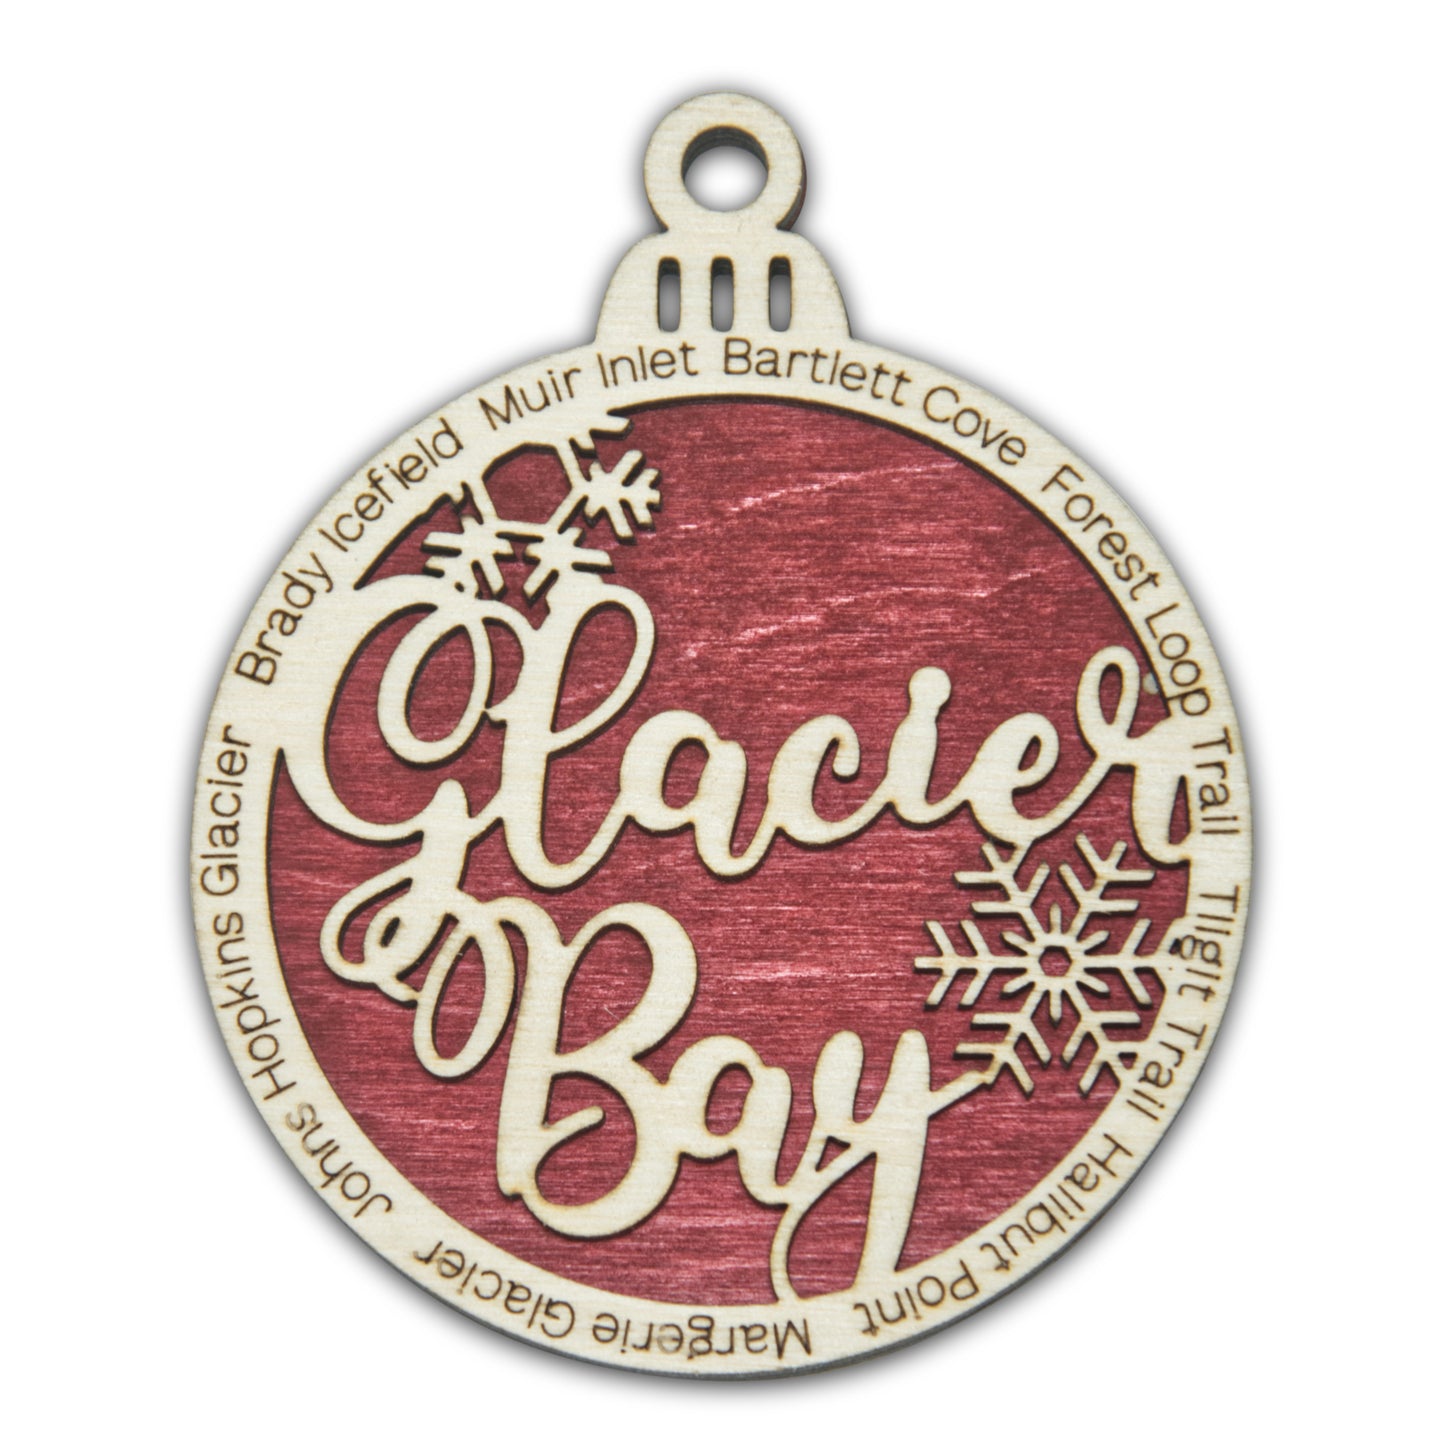 Glacier Bay National Park Christmas Ornament